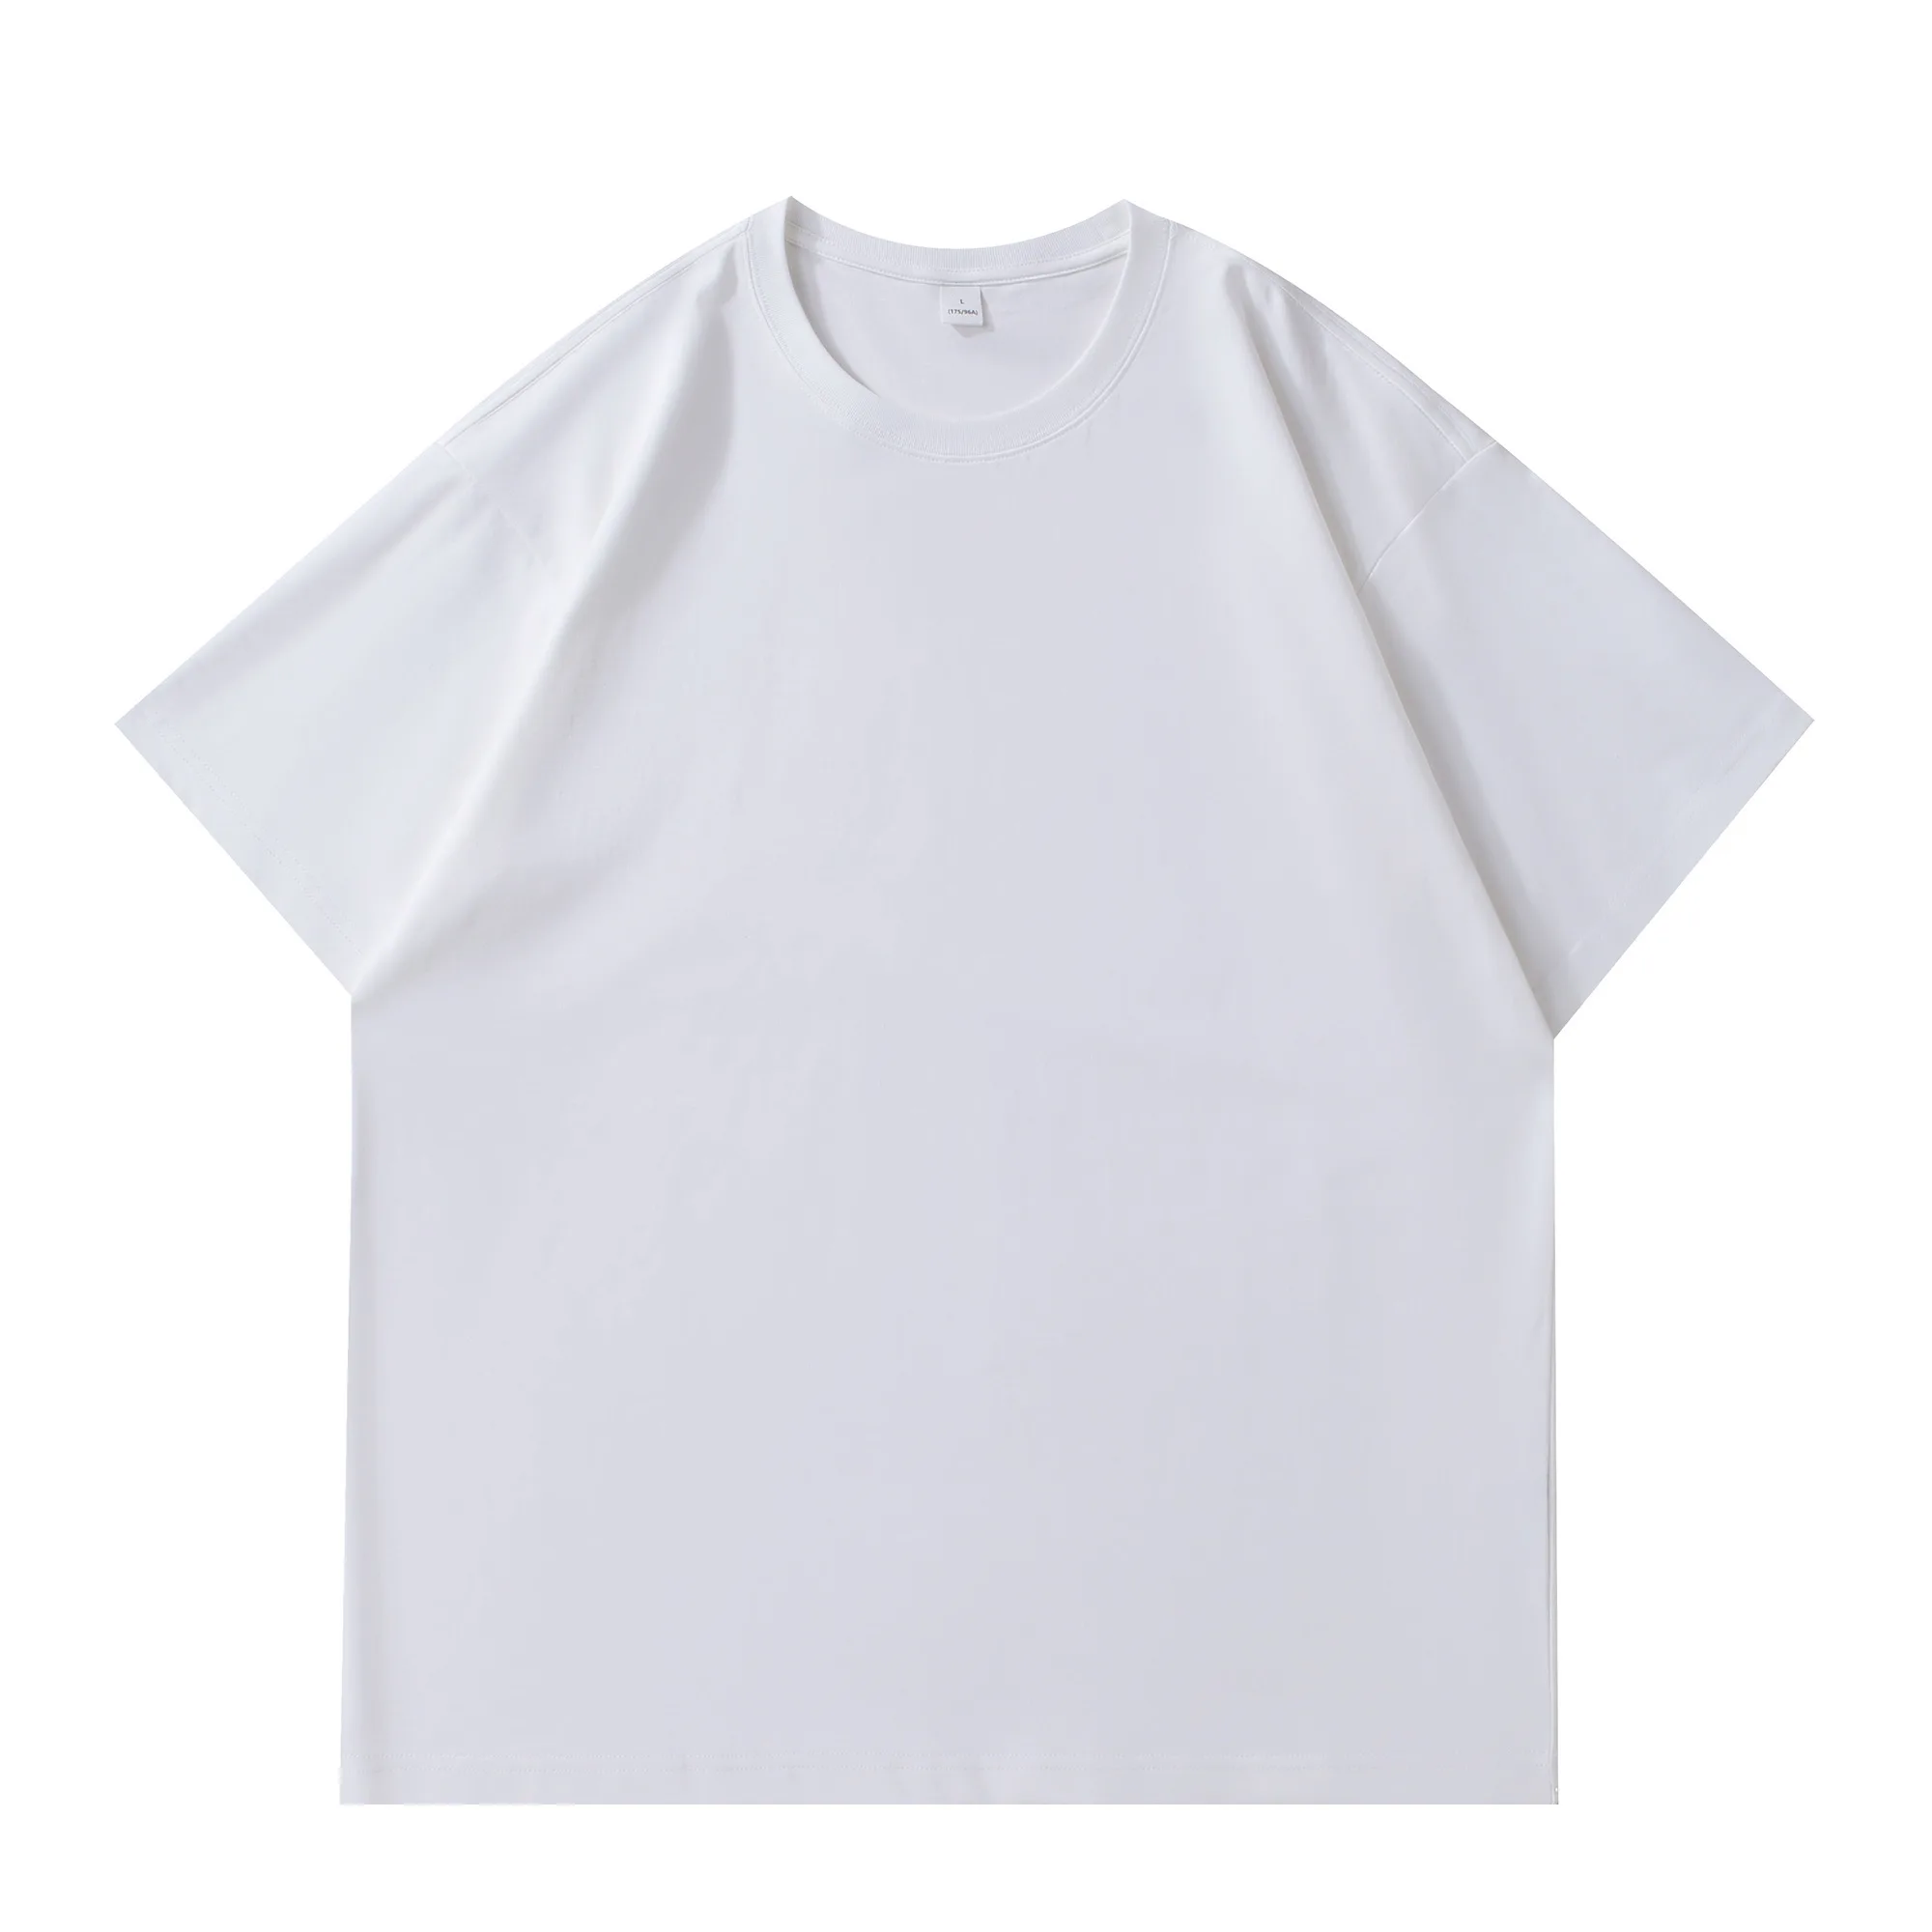 New Elasticity Man 100 Cotton T Shirt Oversized Crewneck Sweatshirt ...